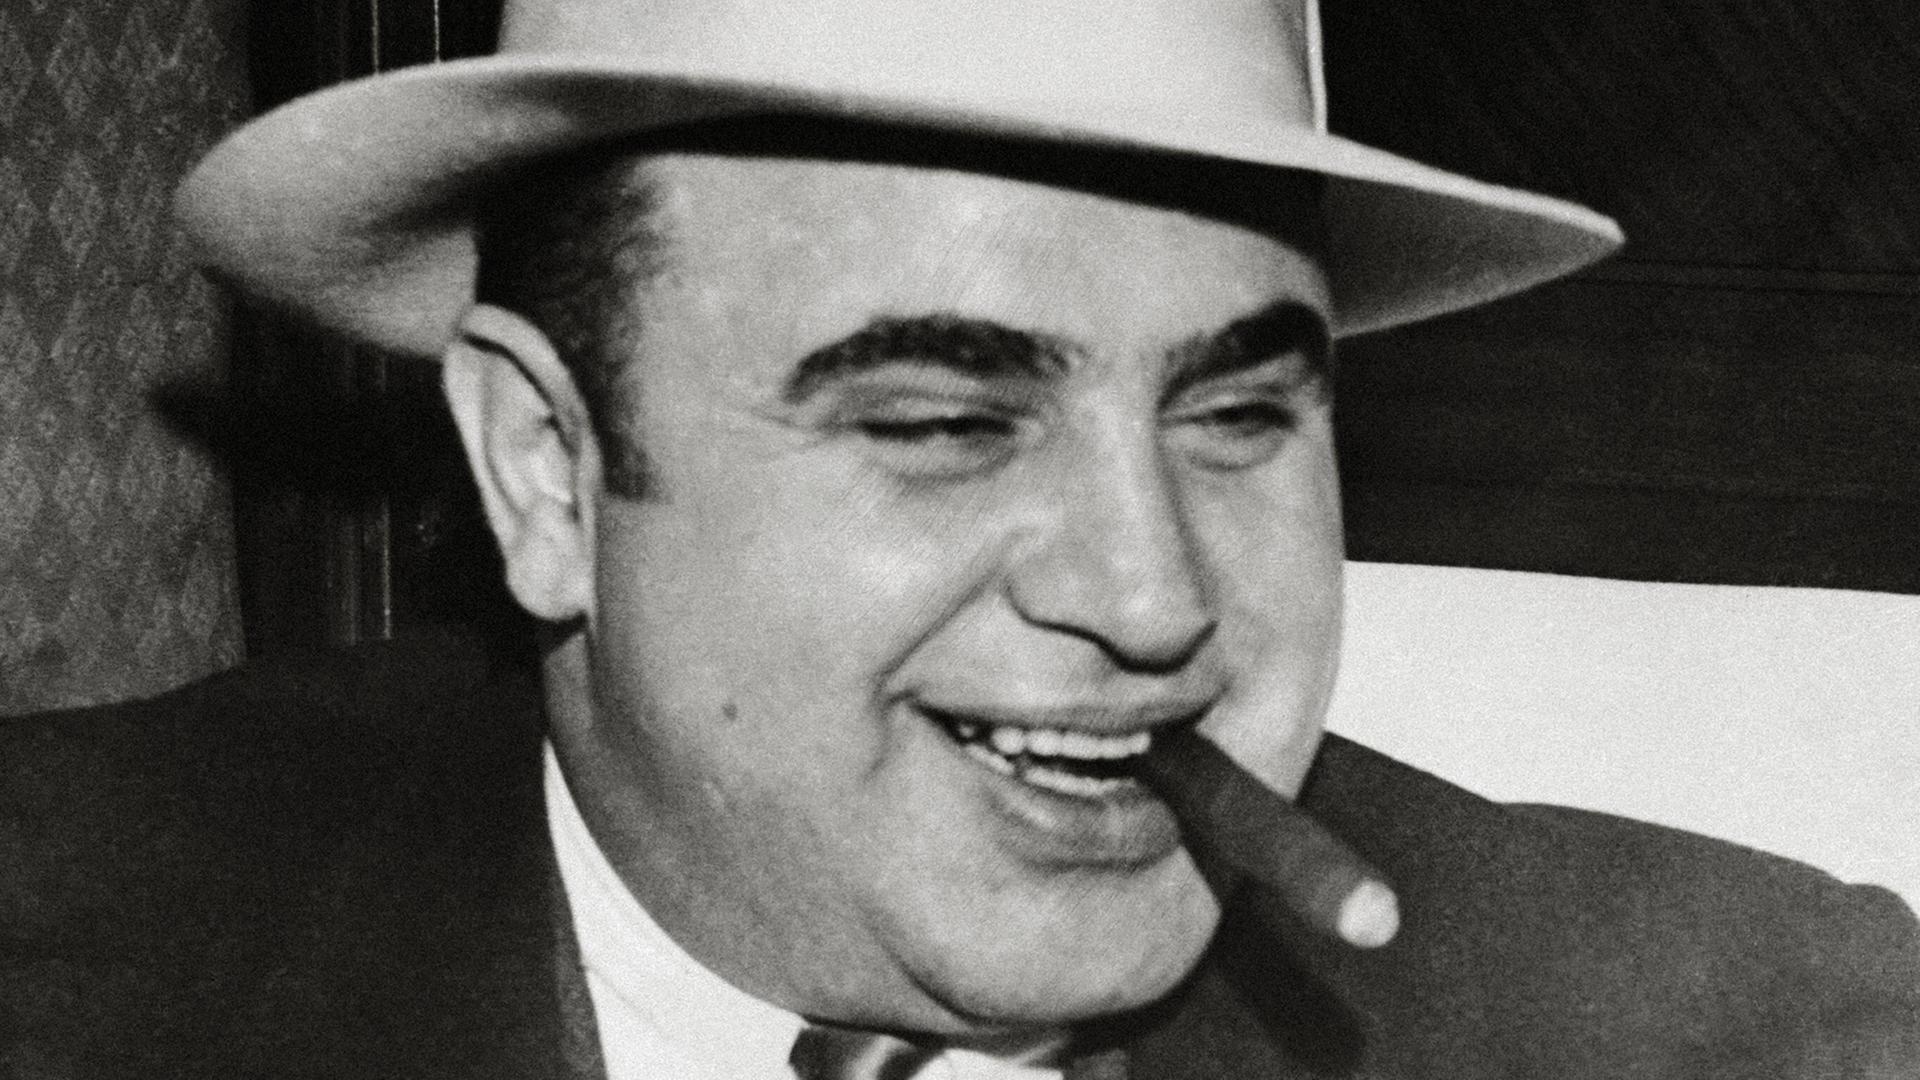 Der Mafia-Boss Al Capone, aufgenommen circa 1930